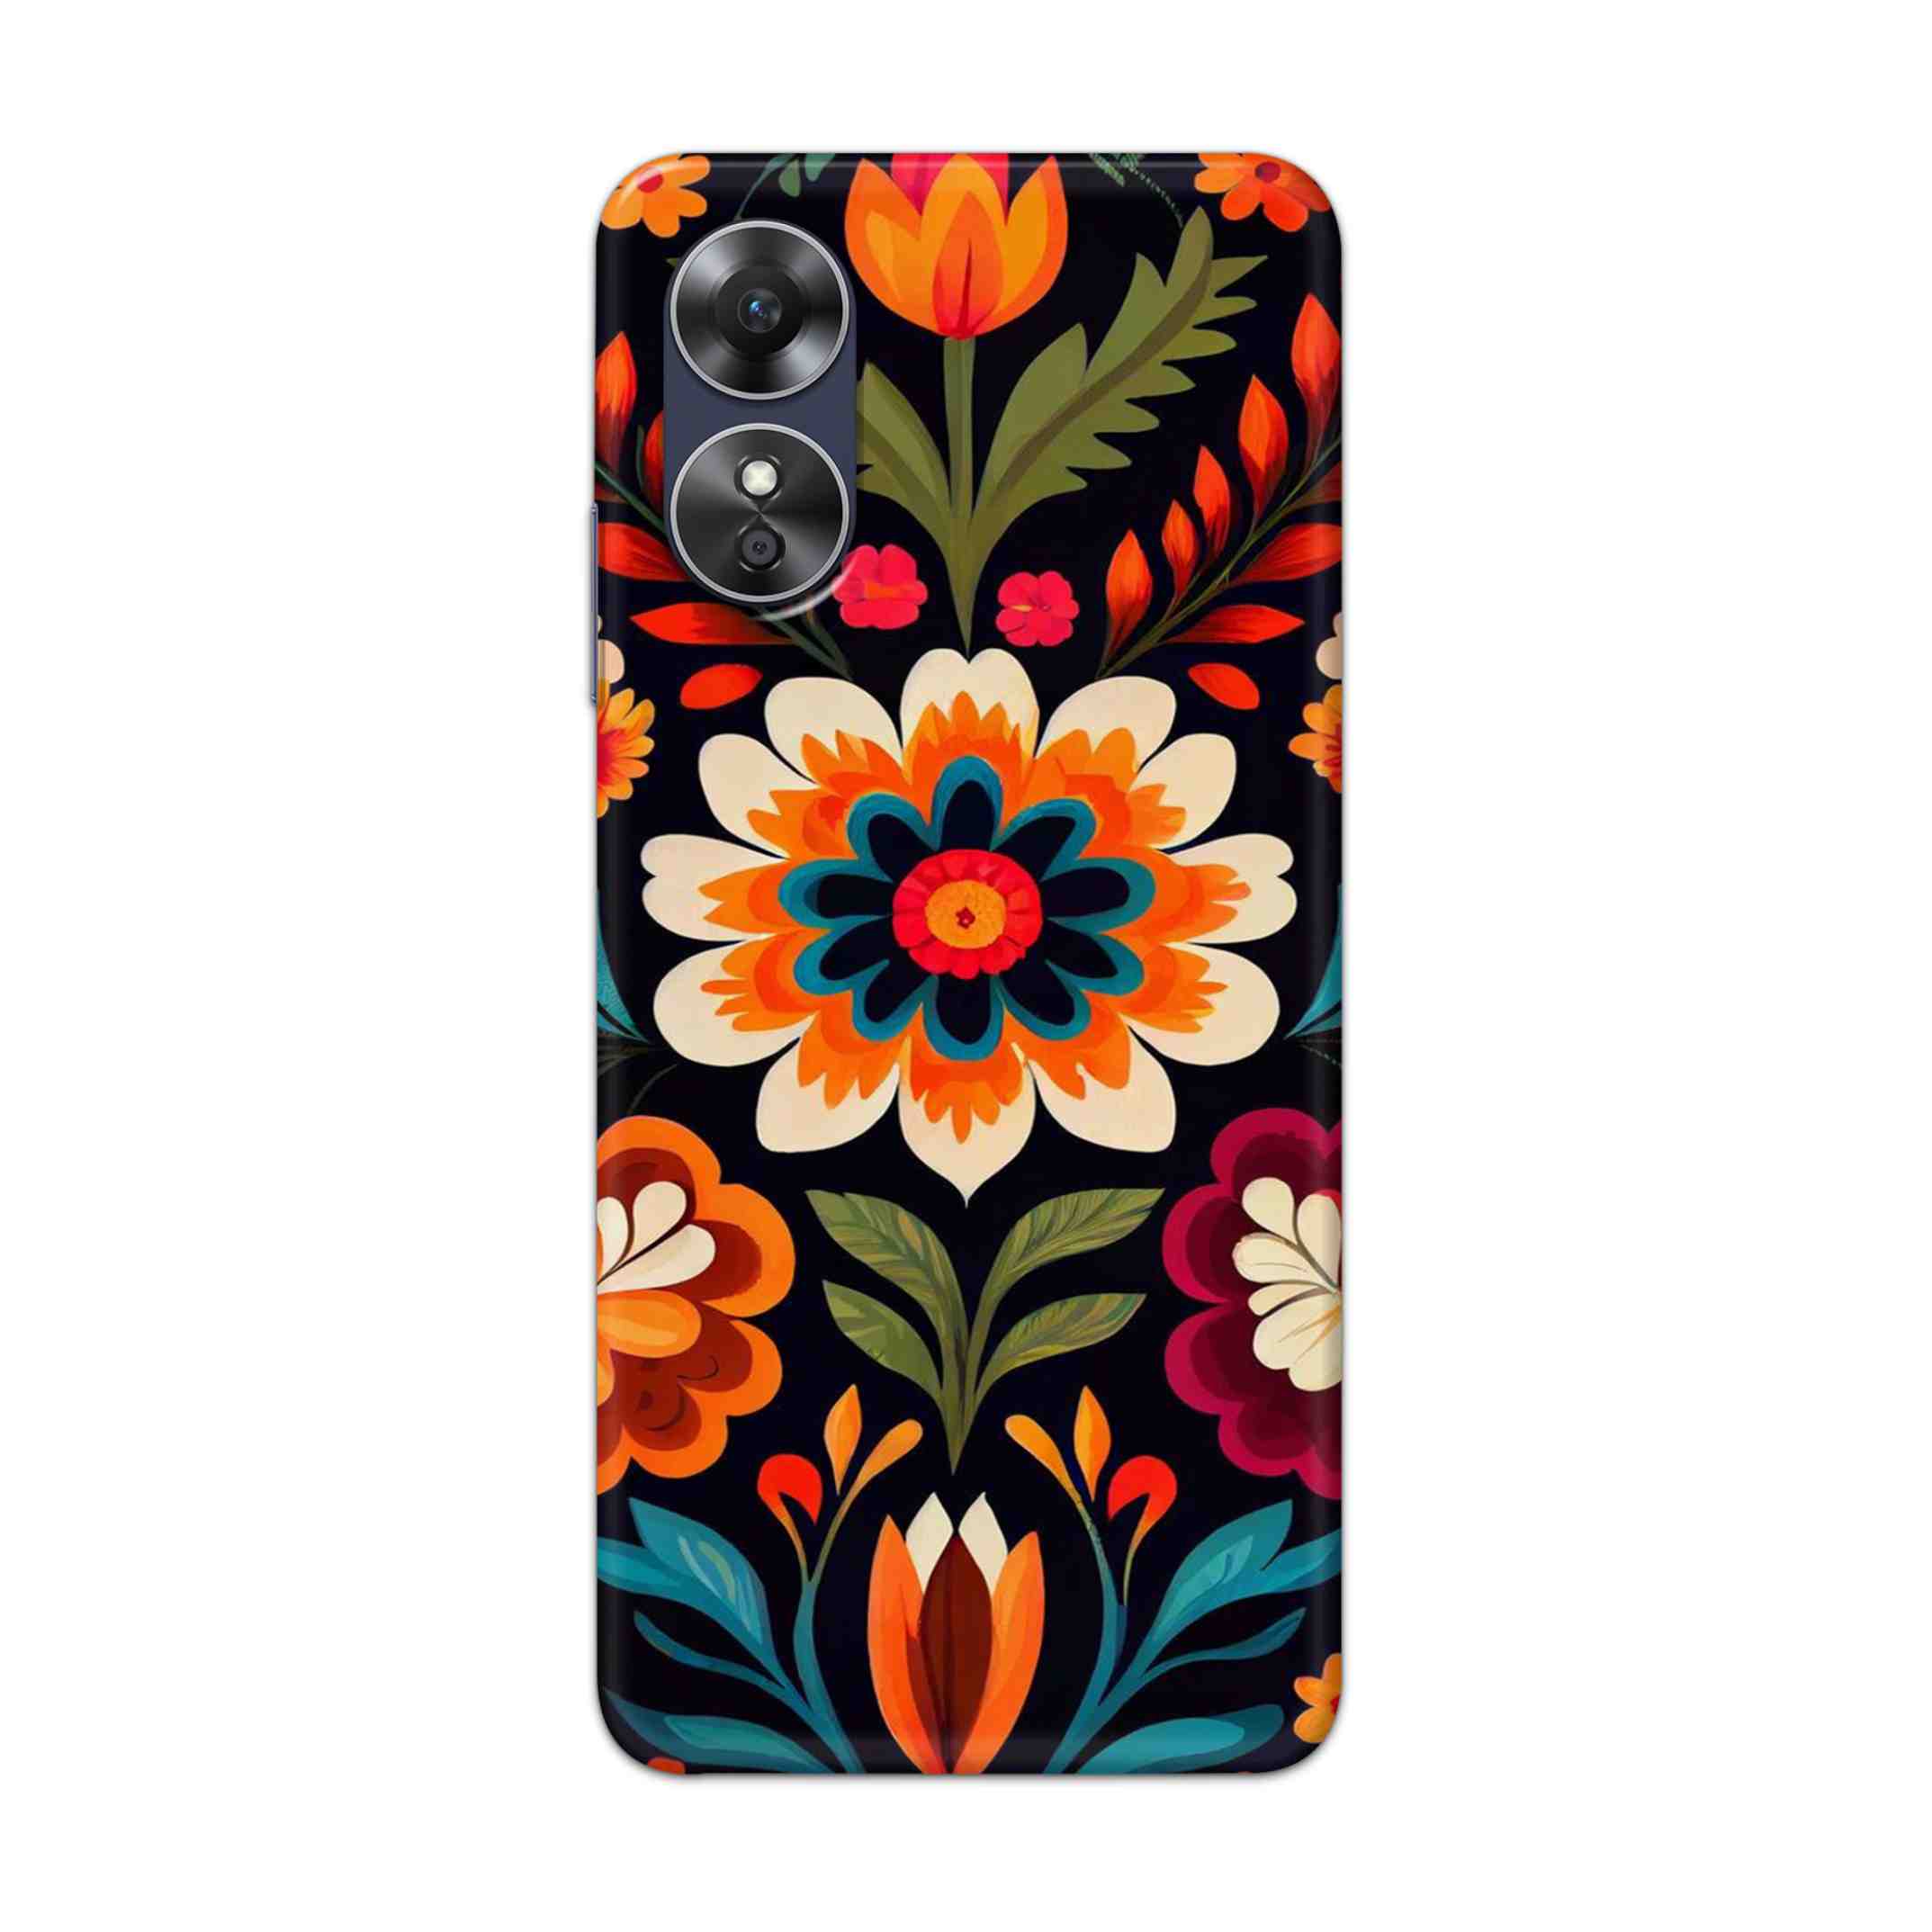 Buy Flower Hard Back Mobile Phone Case Cover For Oppo A17 Online